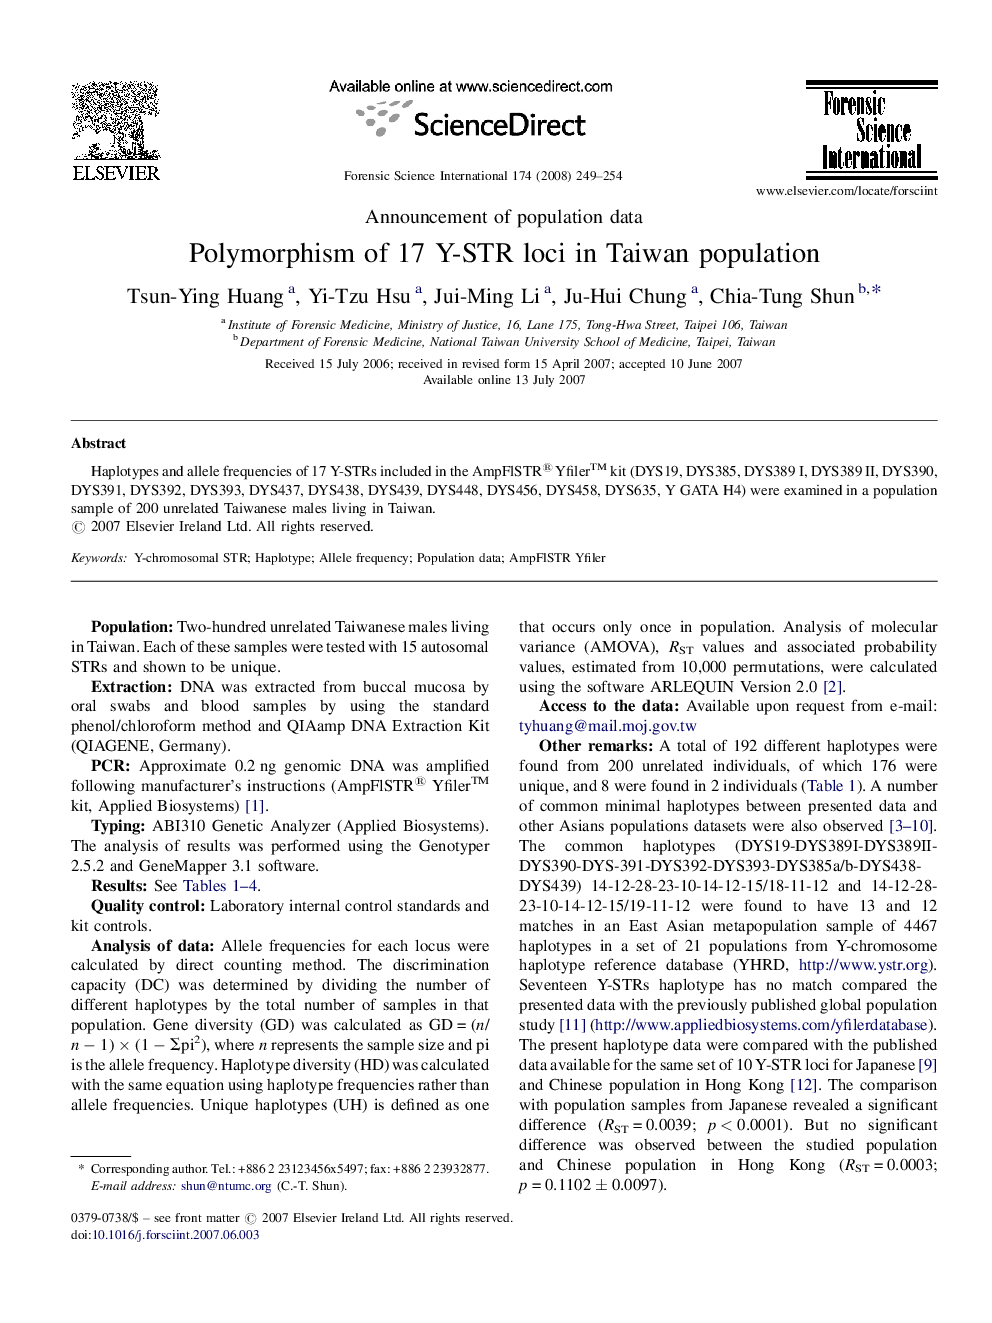 Polymorphism of 17 Y-STR loci in Taiwan population